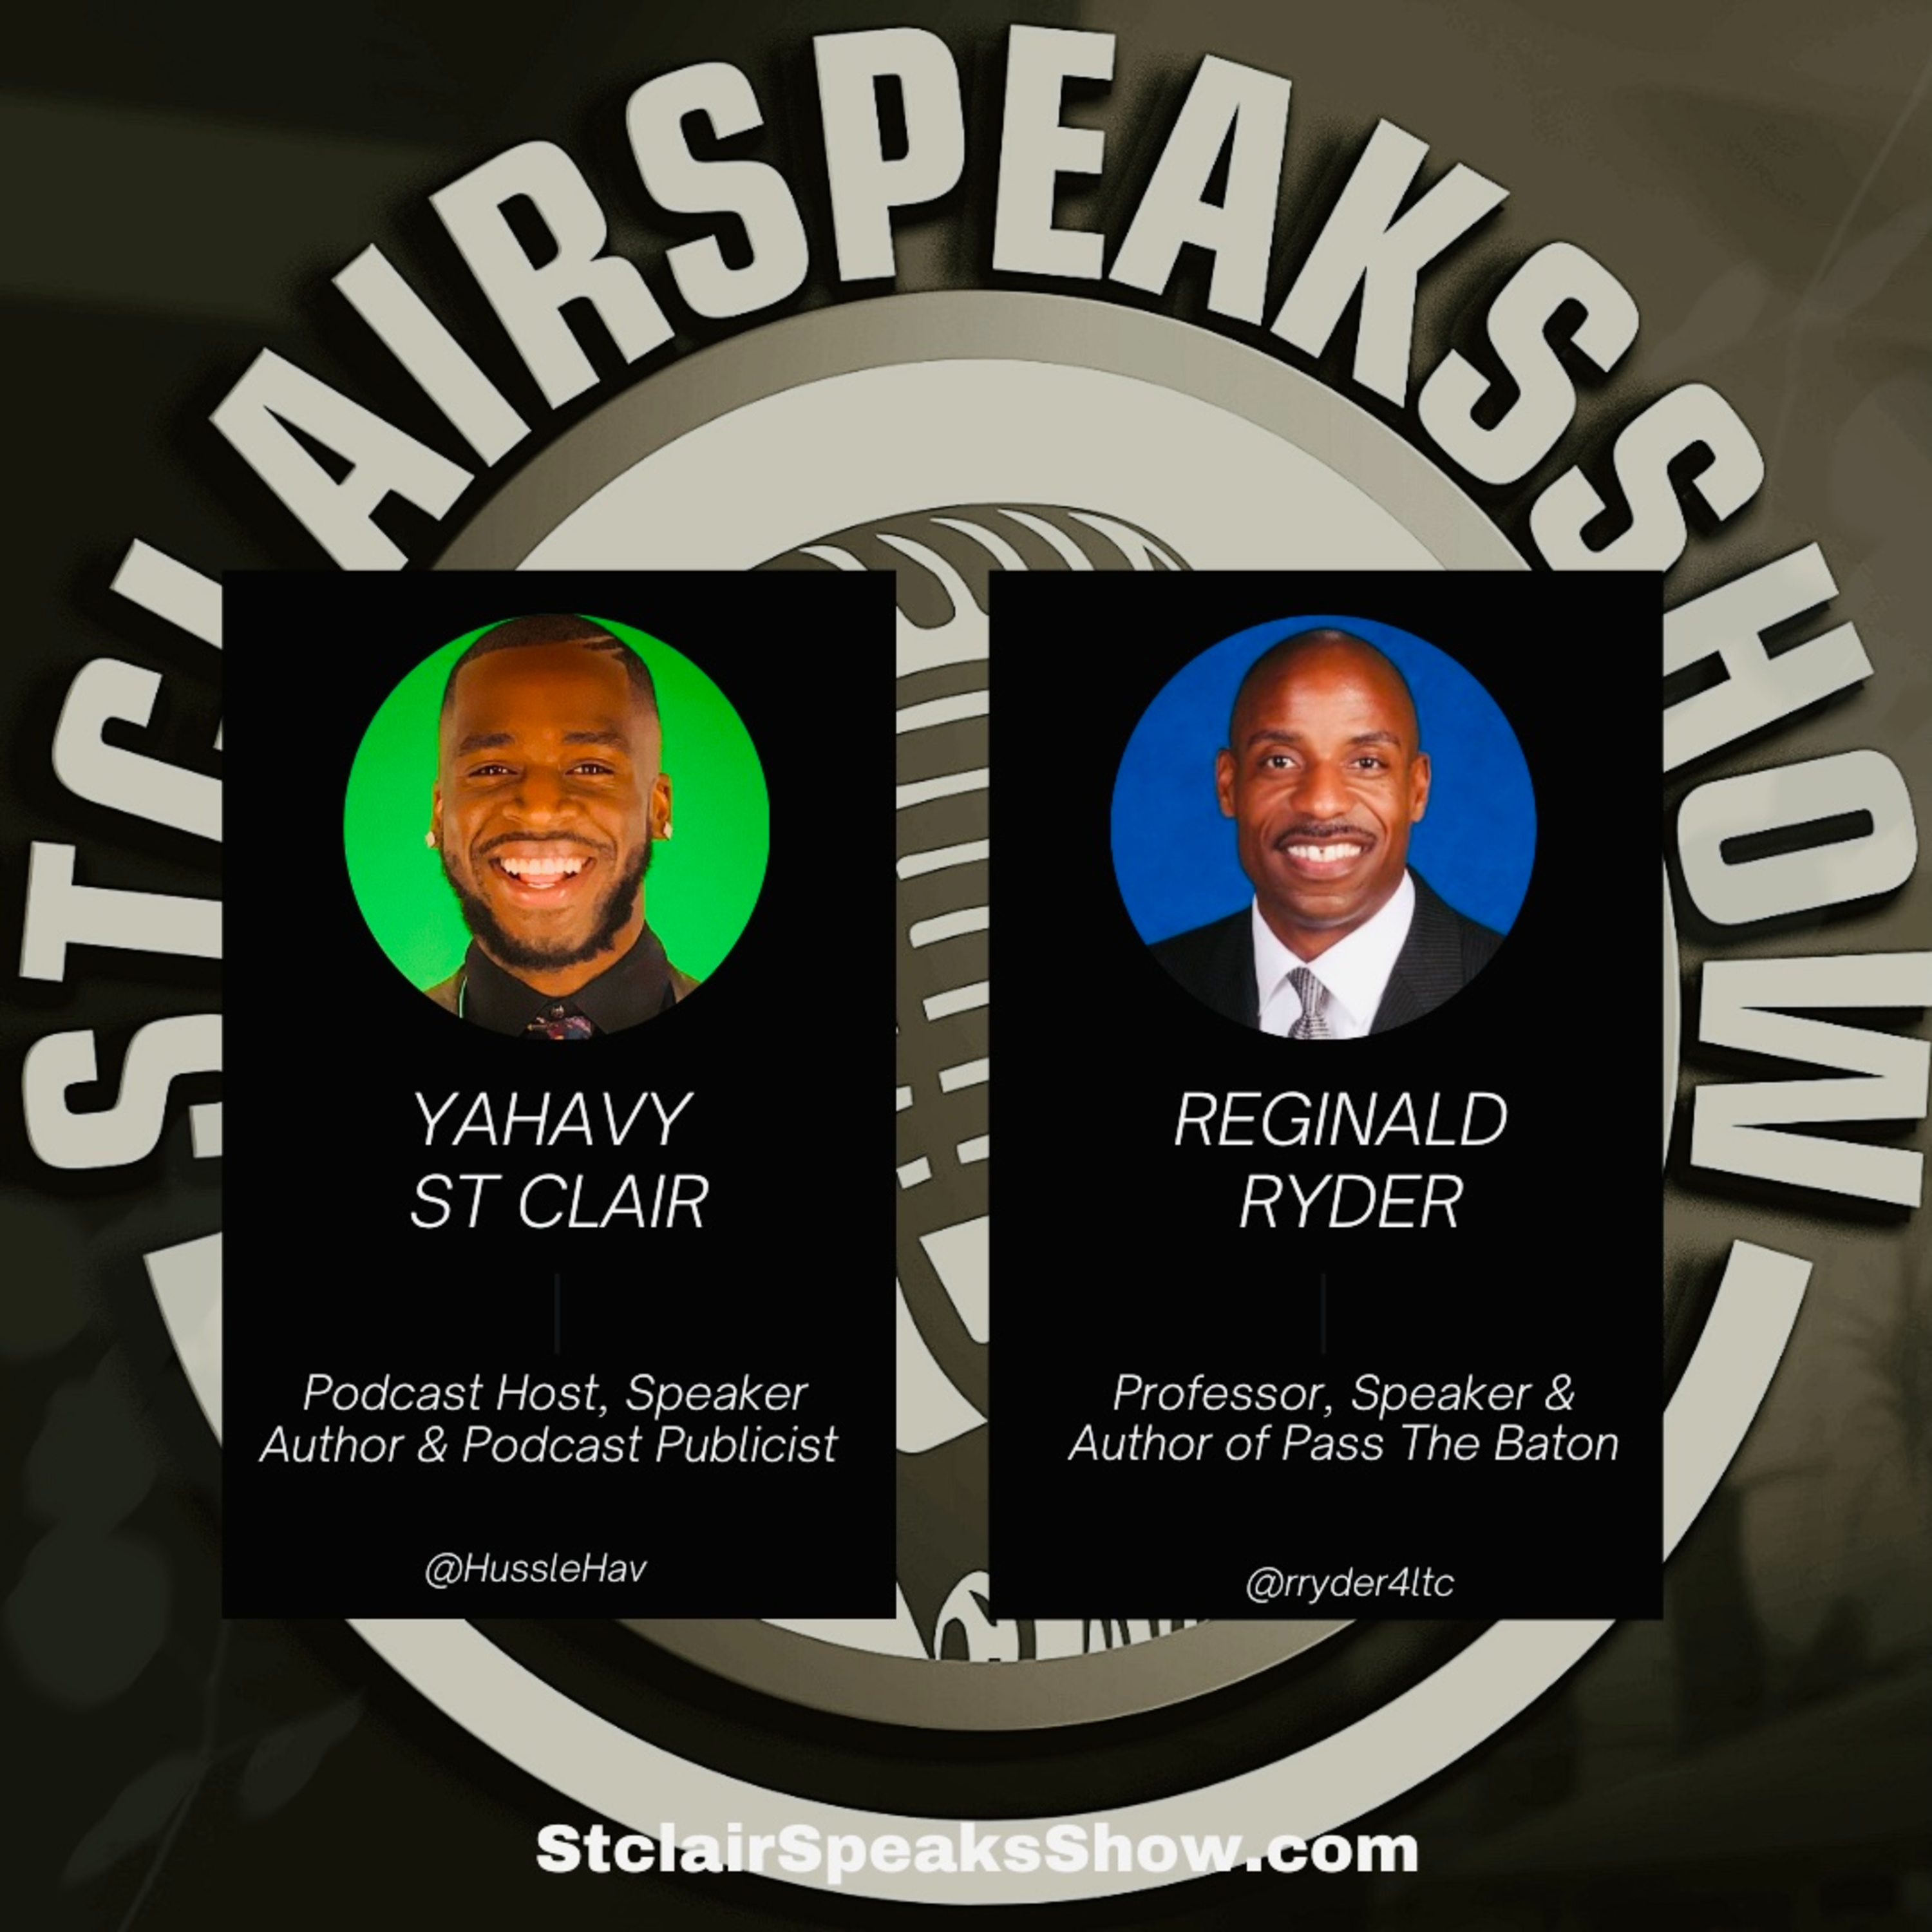 The StclairSpeaksshow featuring Reginald Ryder Professor, Speaker, Author of Passing The Baton Ep #35 Image